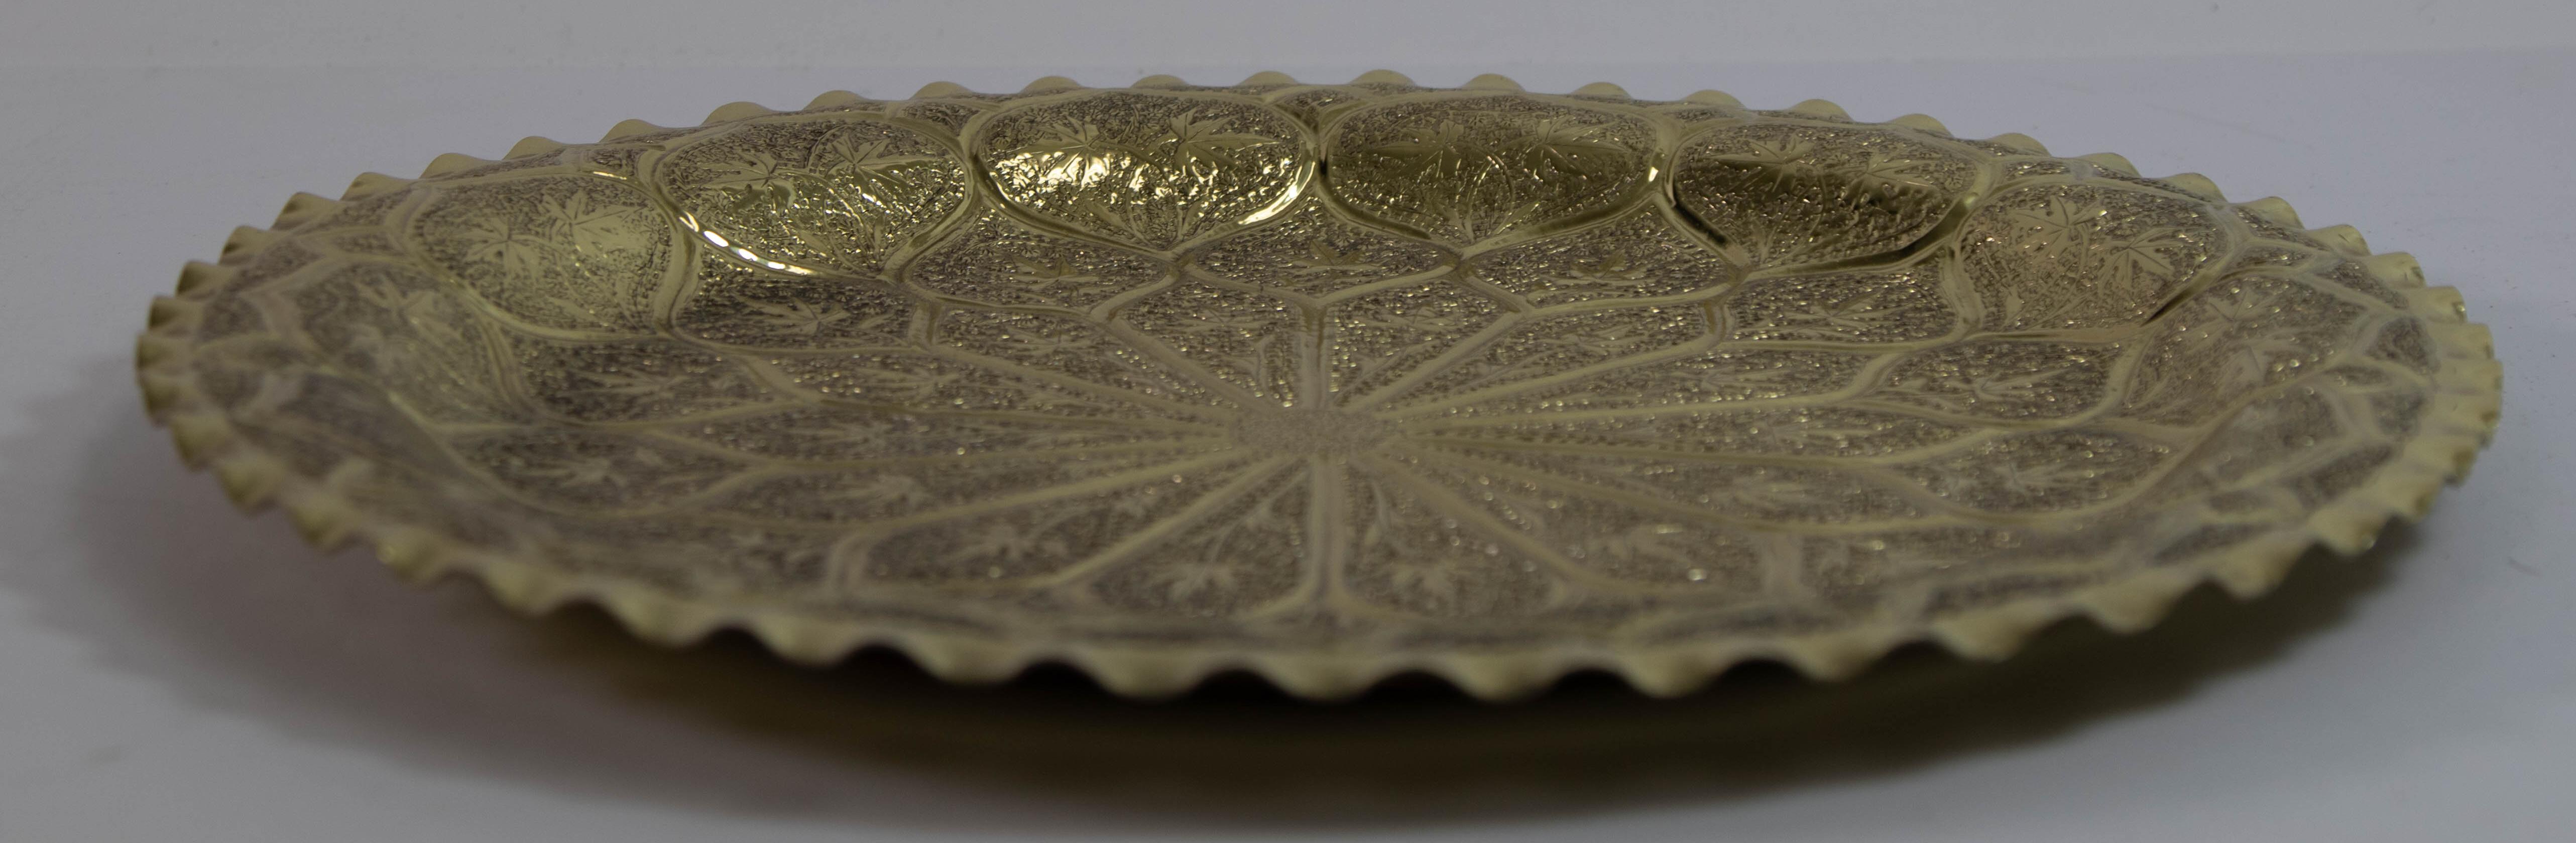 Moroccan Brass Tray Moorish Islamic Metalwork 13 inches Diameter For Sale 5